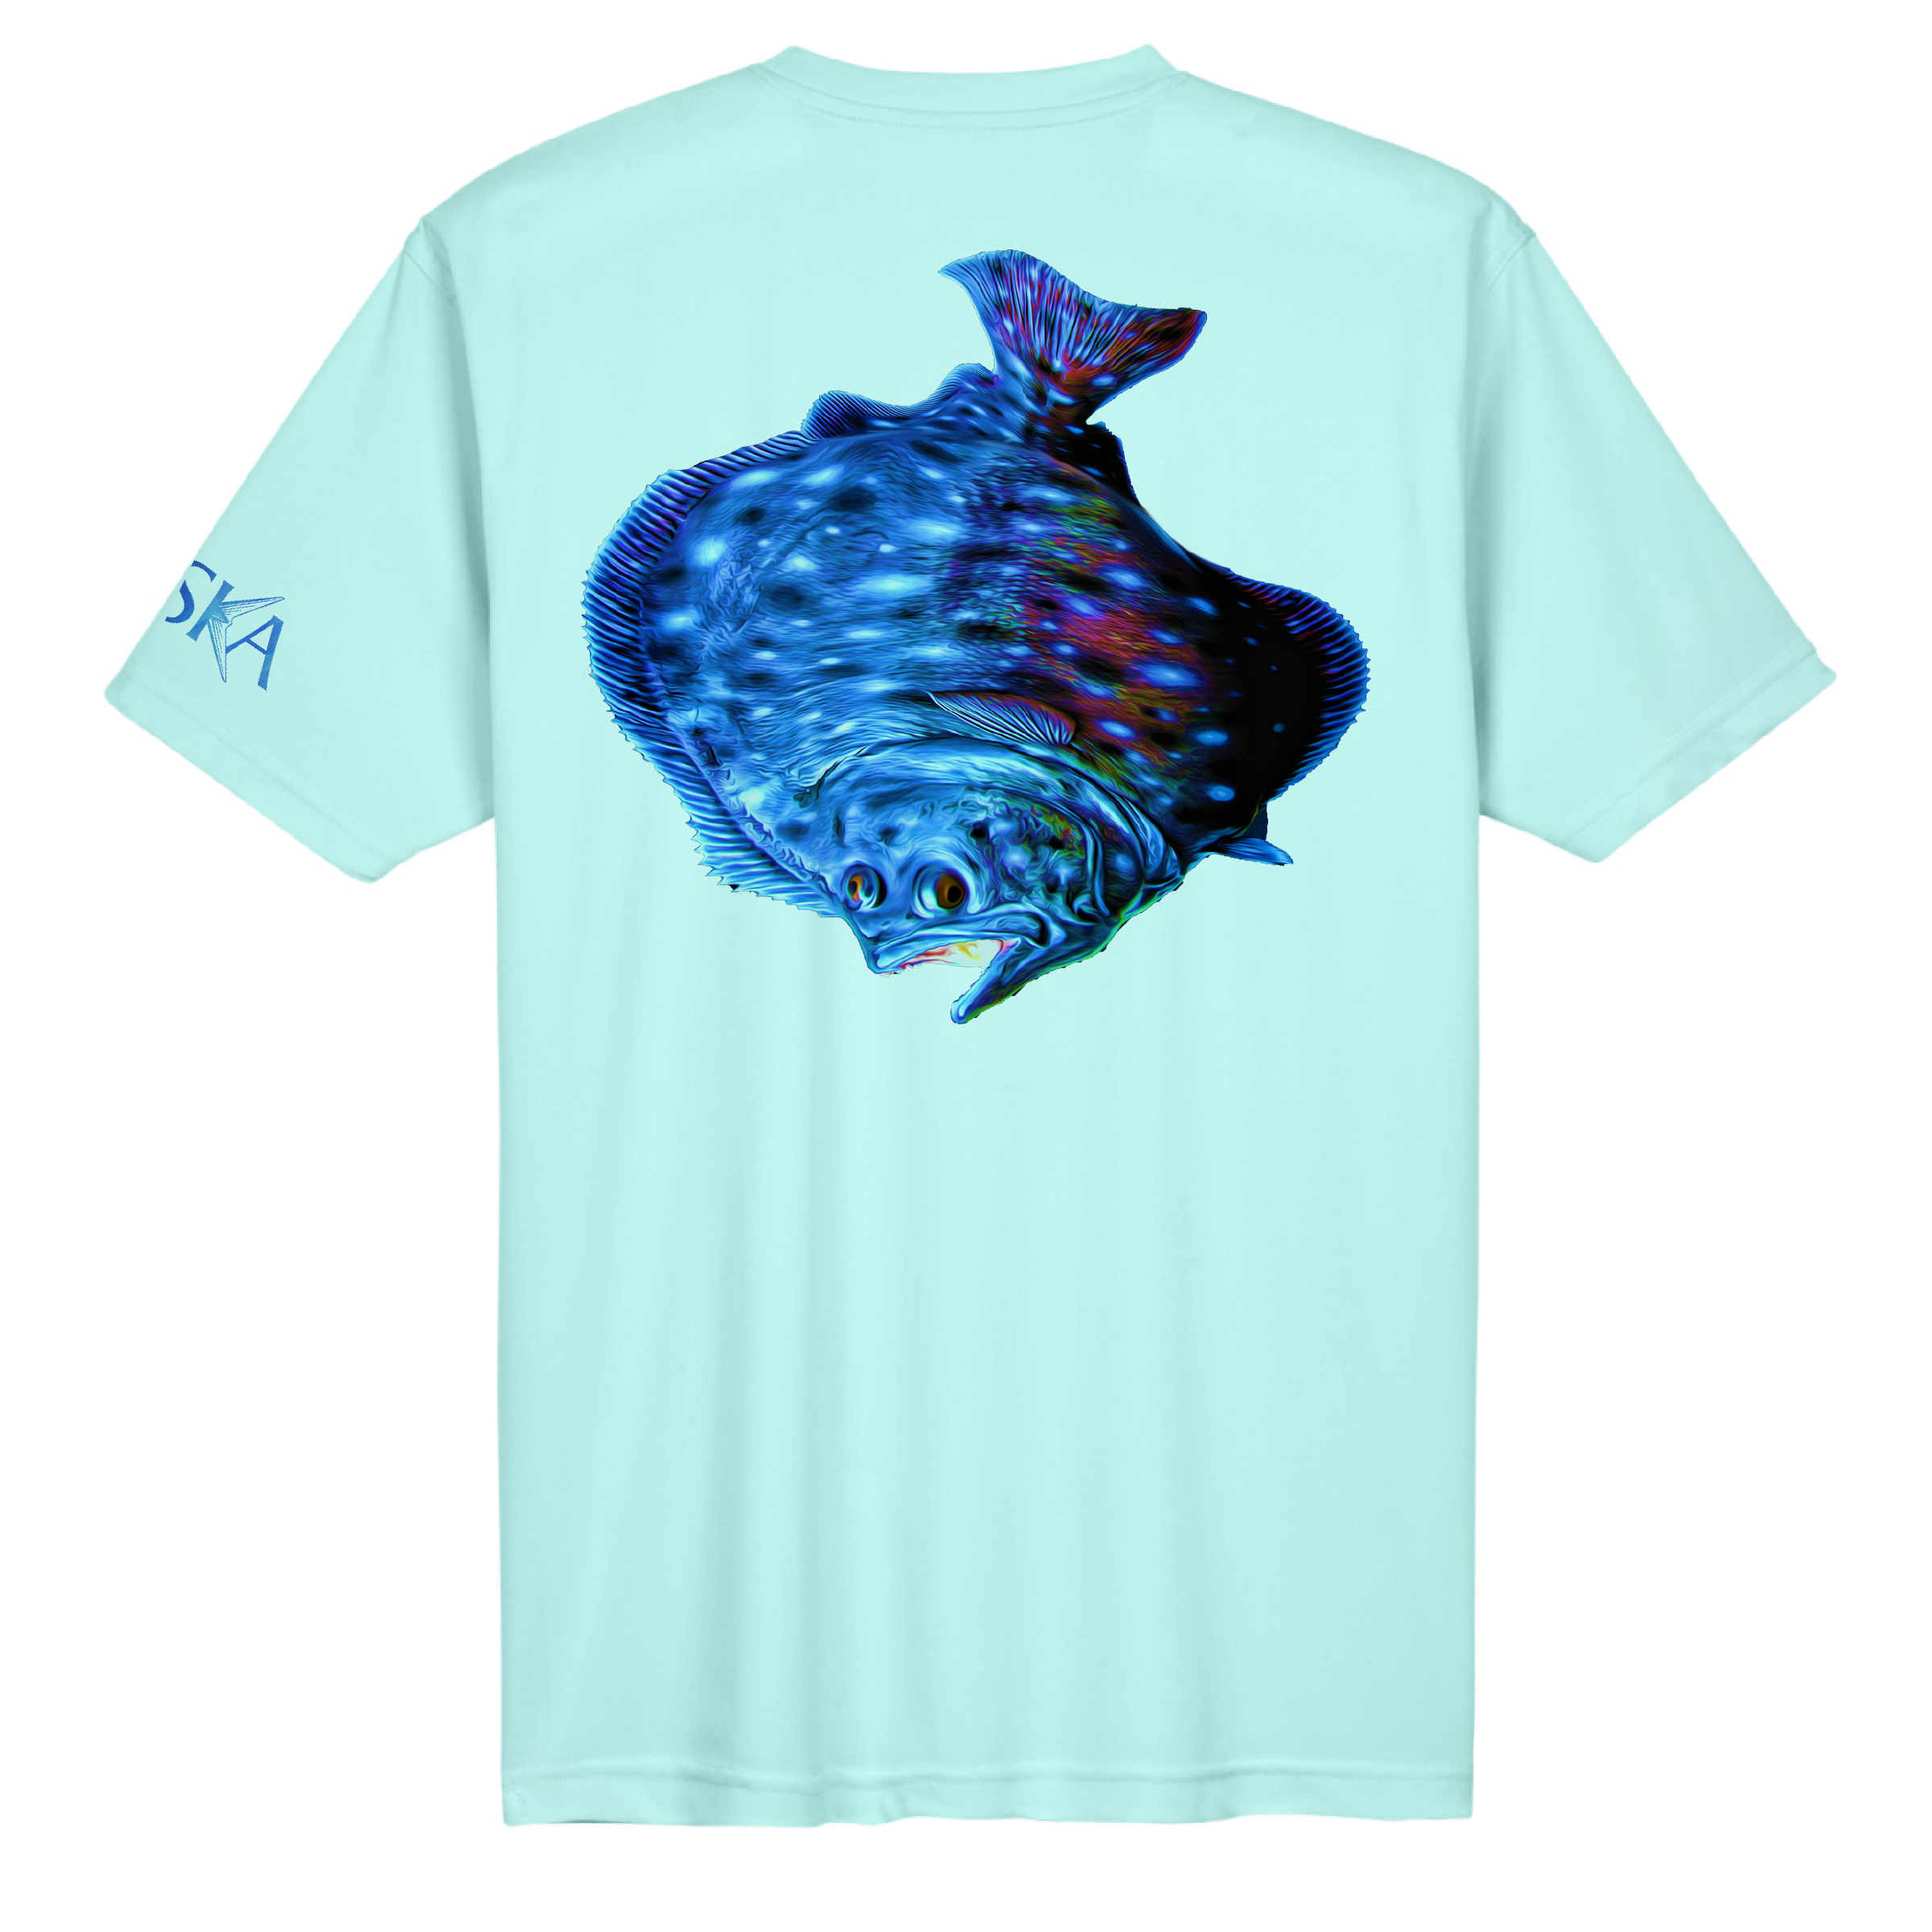 Flounder Short-Sleeve Dry-Fit Shirt